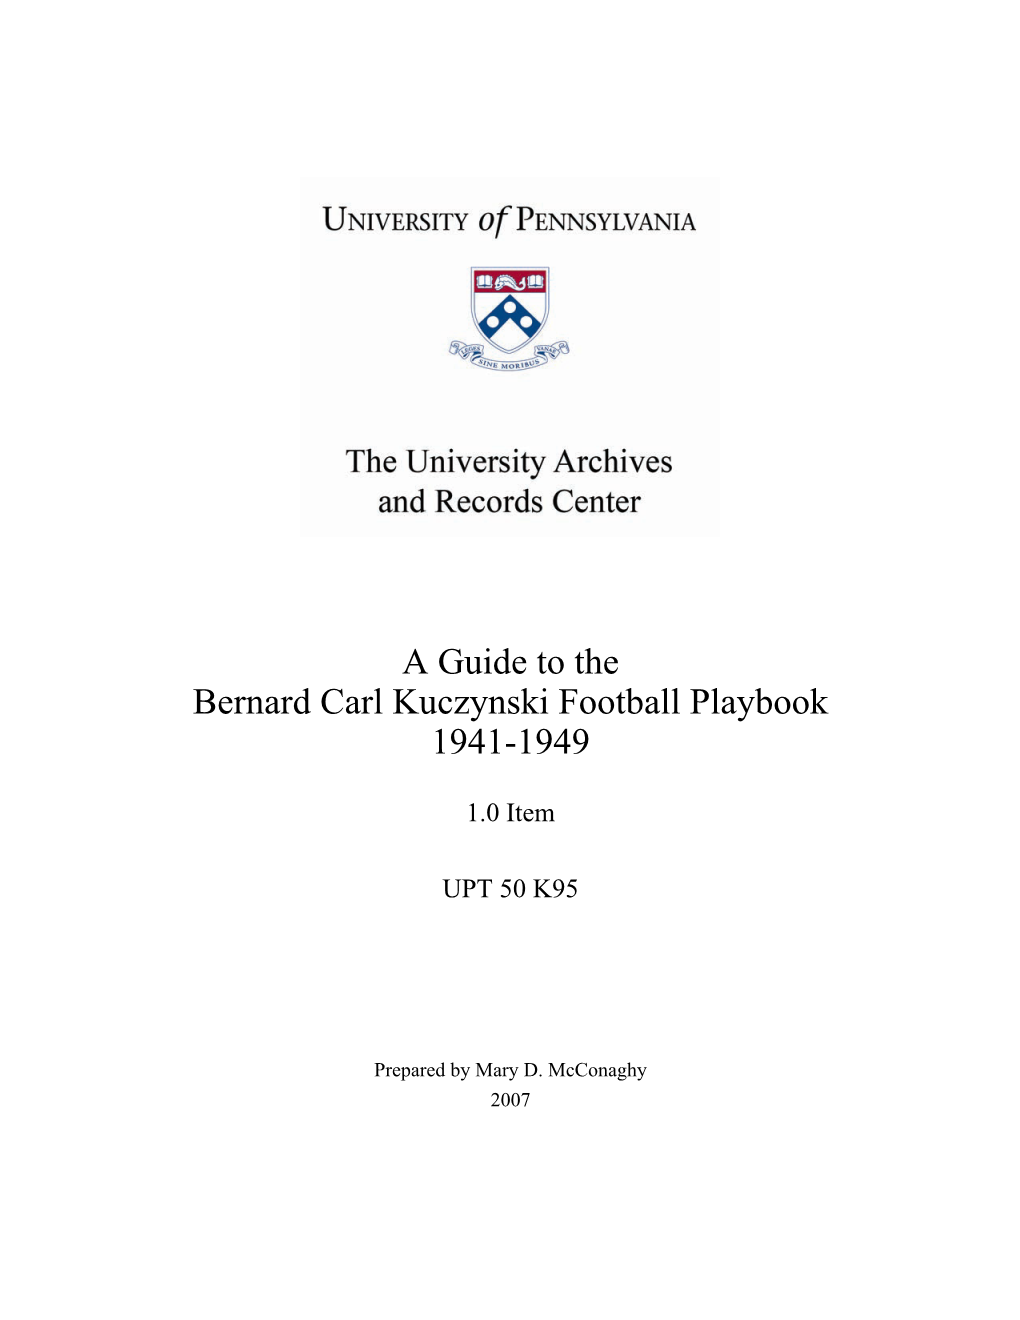 Guide, Bernard Carl Kuczynski Football Playbook (UPT 50 K95)